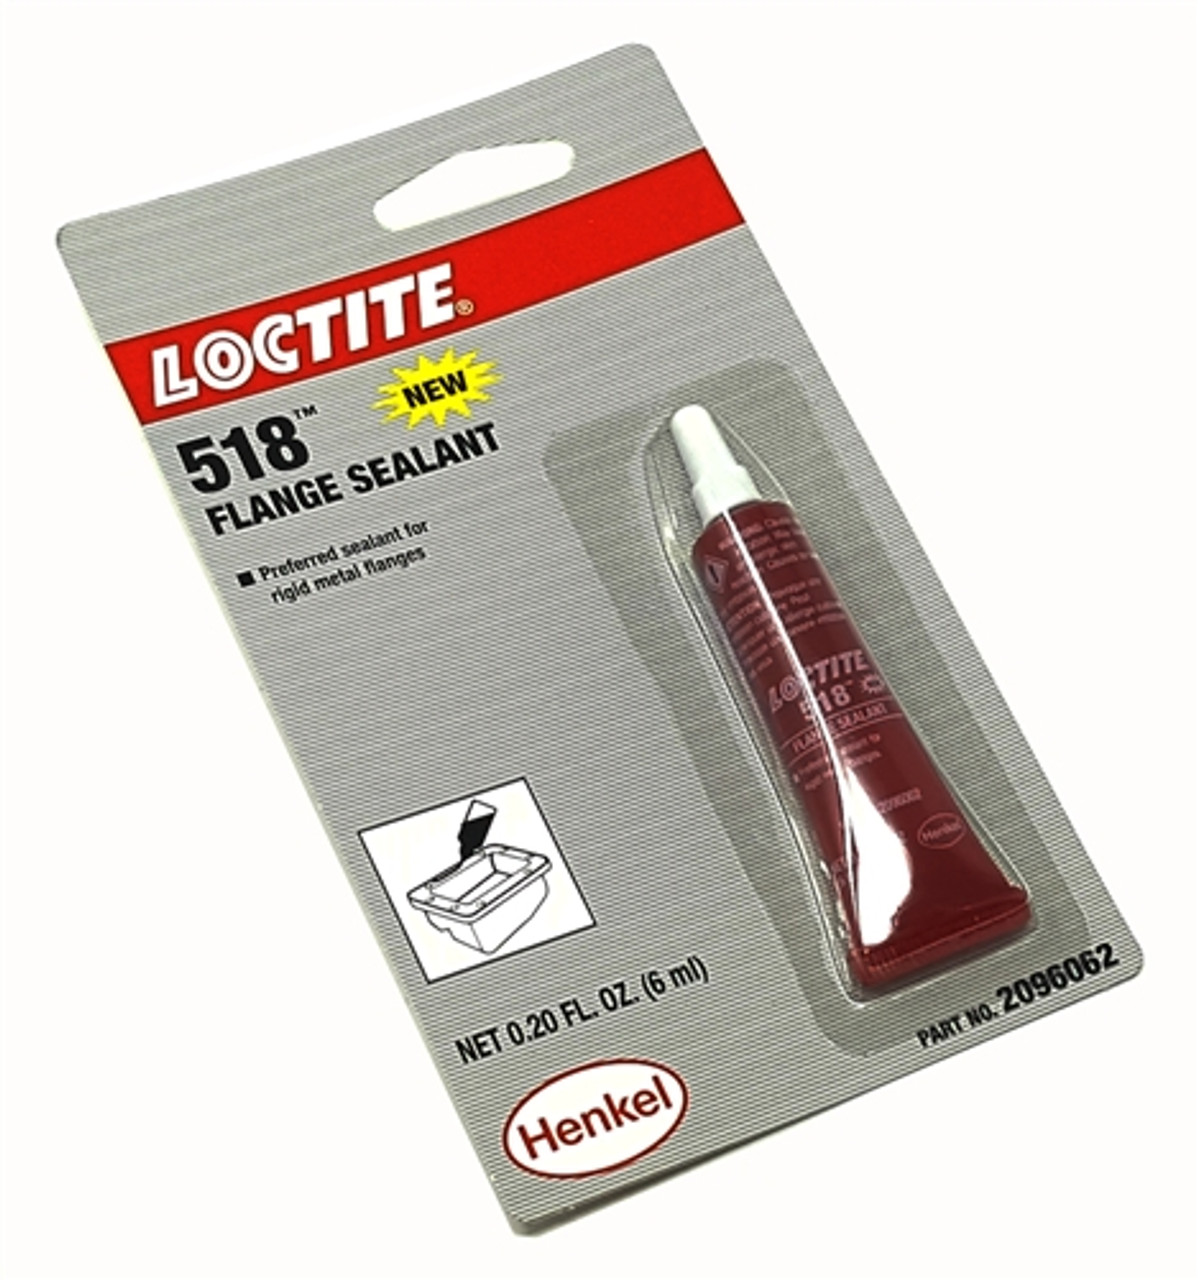 Loctite Products, Loctite 518